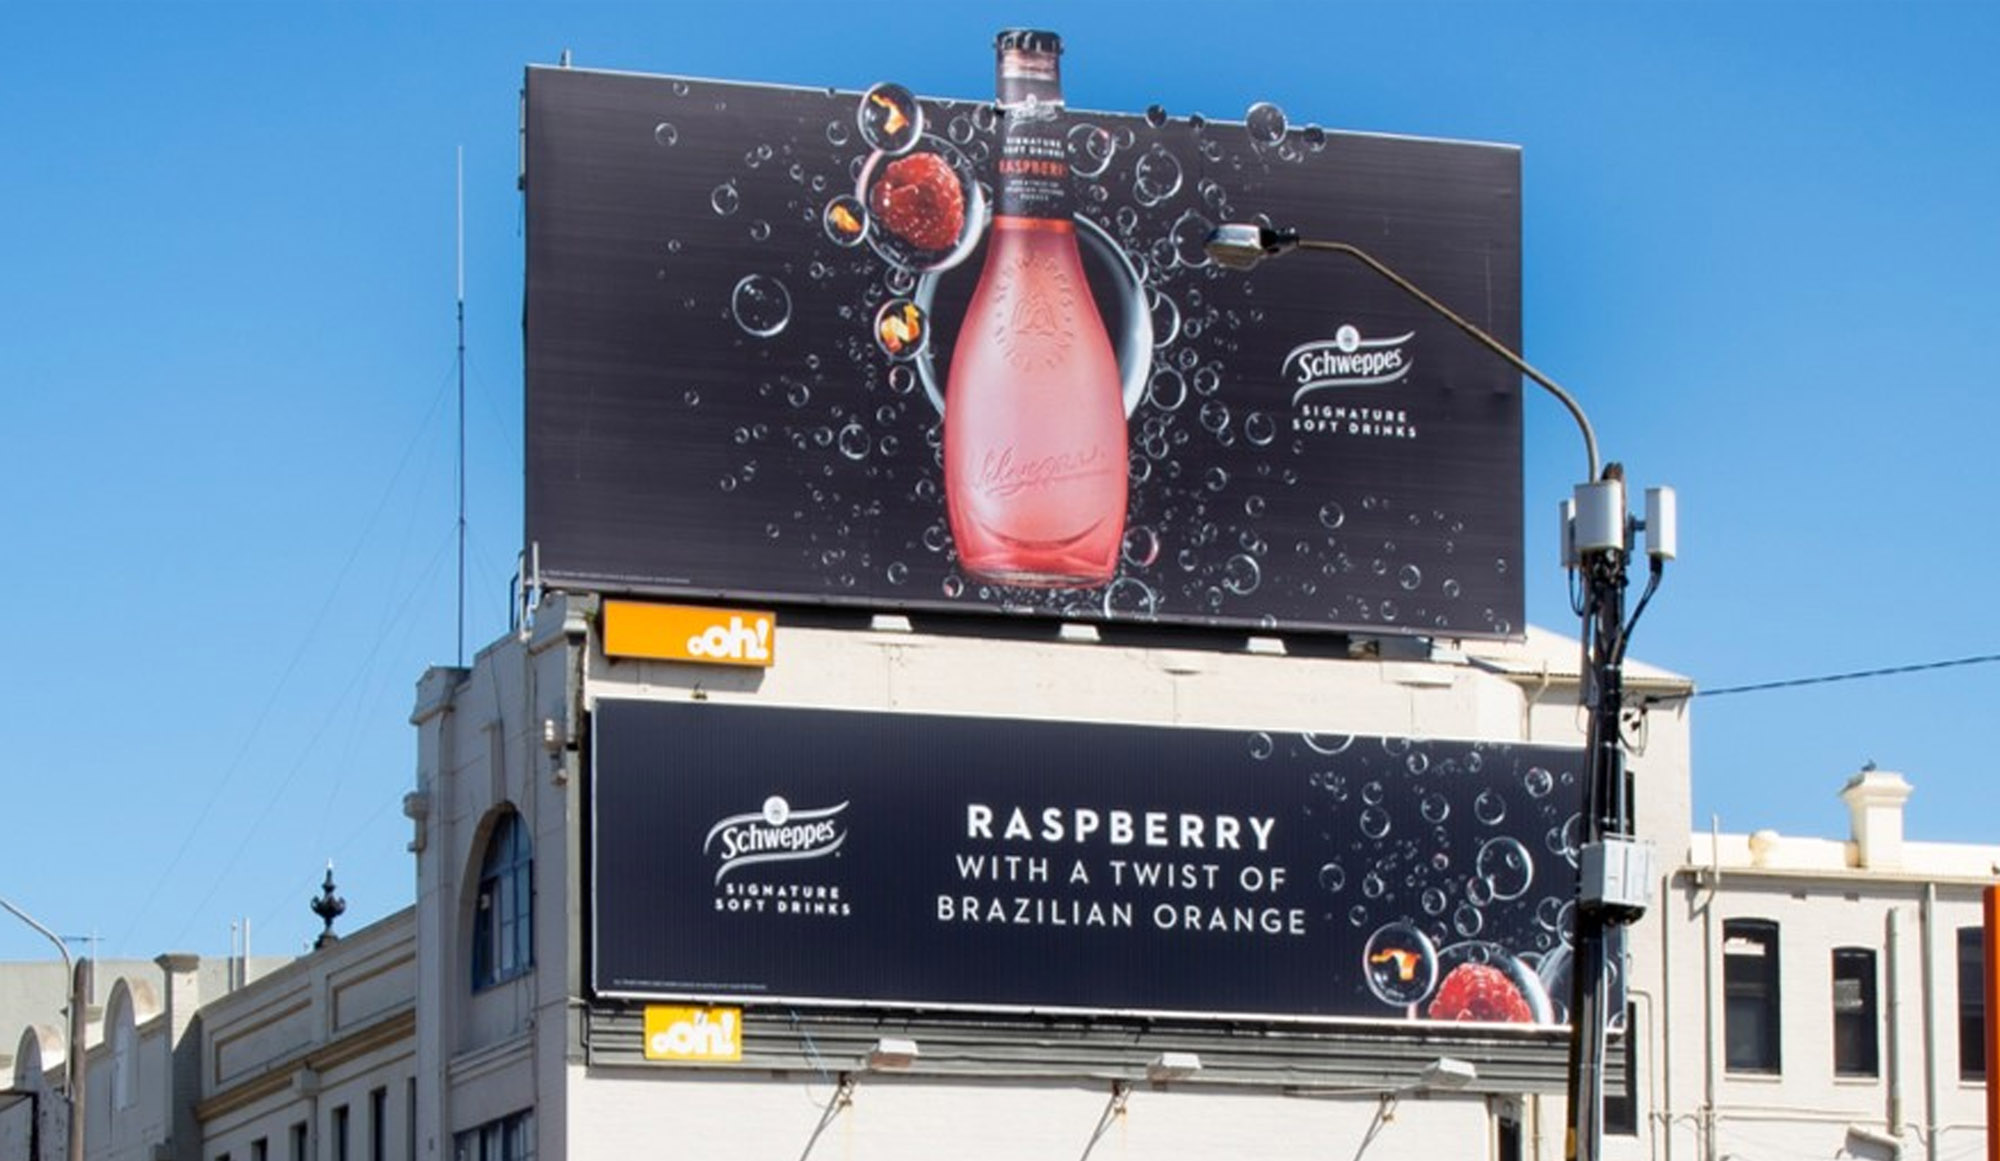 Schweppes road advertising on billboard